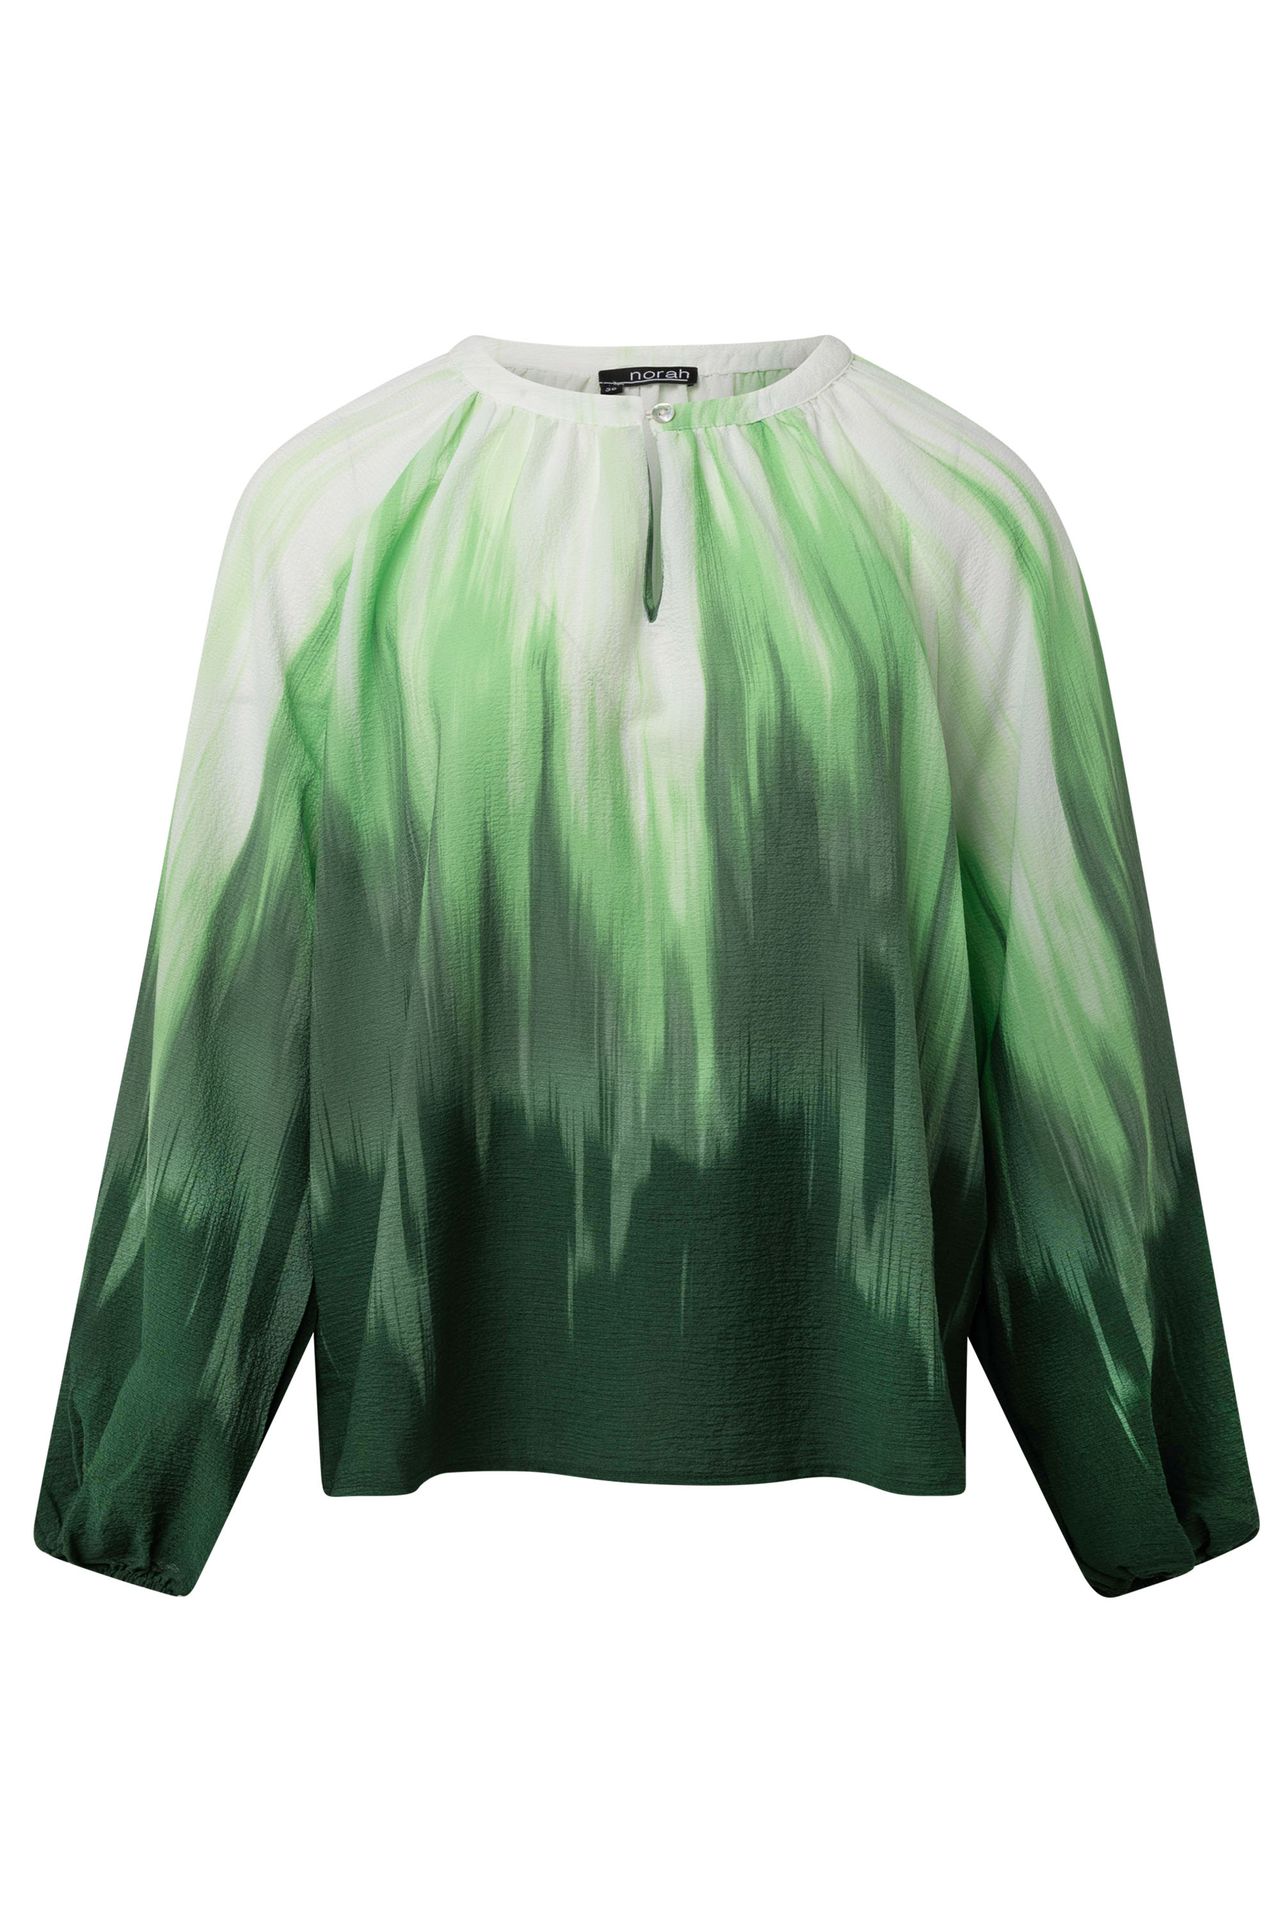 Norah Groene blouse green multicolor 214338-520